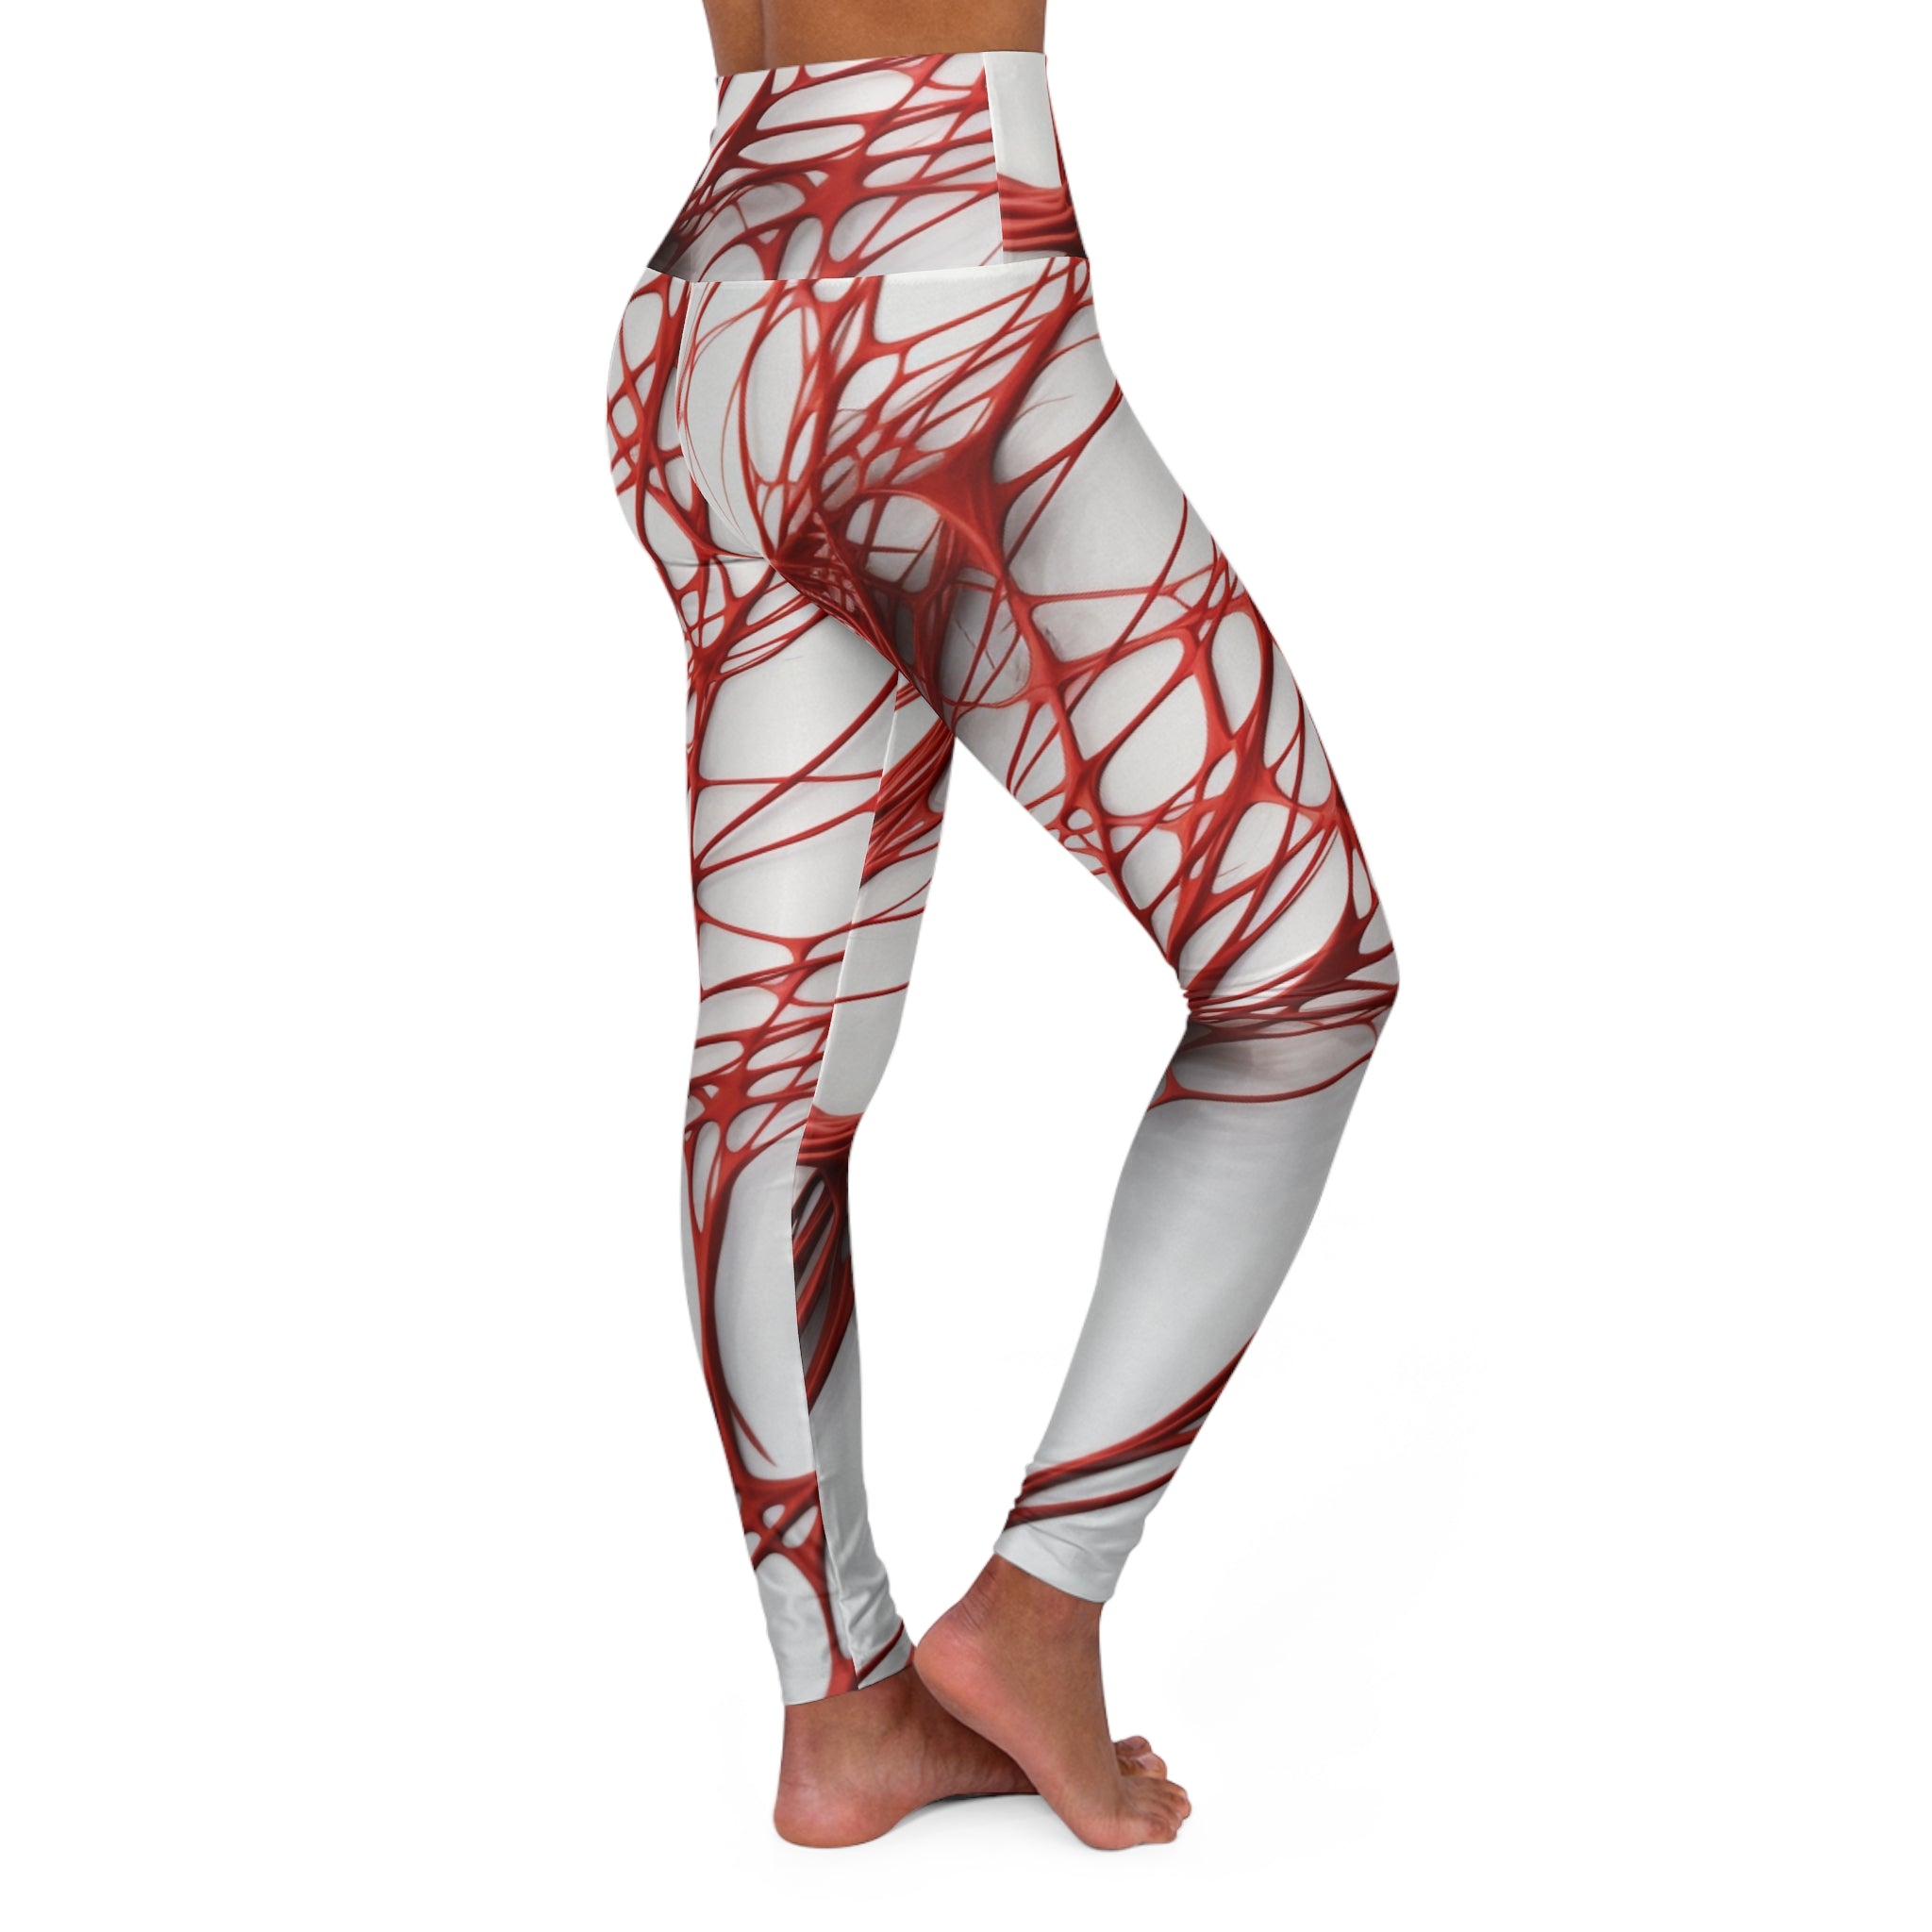 White & Red Gym Leggings for Women S-2XL - Sleek & Supportive